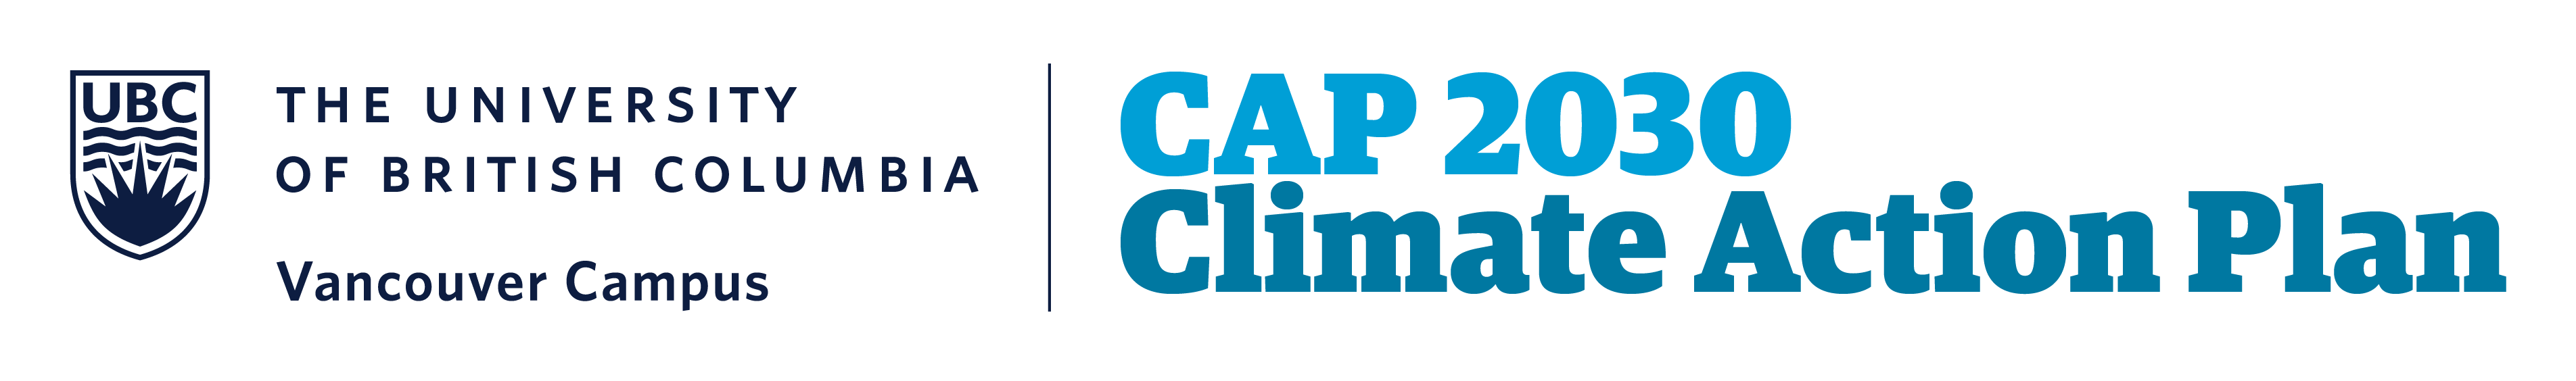 UBC Vancouver Campus, Climate Action Plan 2030 Wordmark